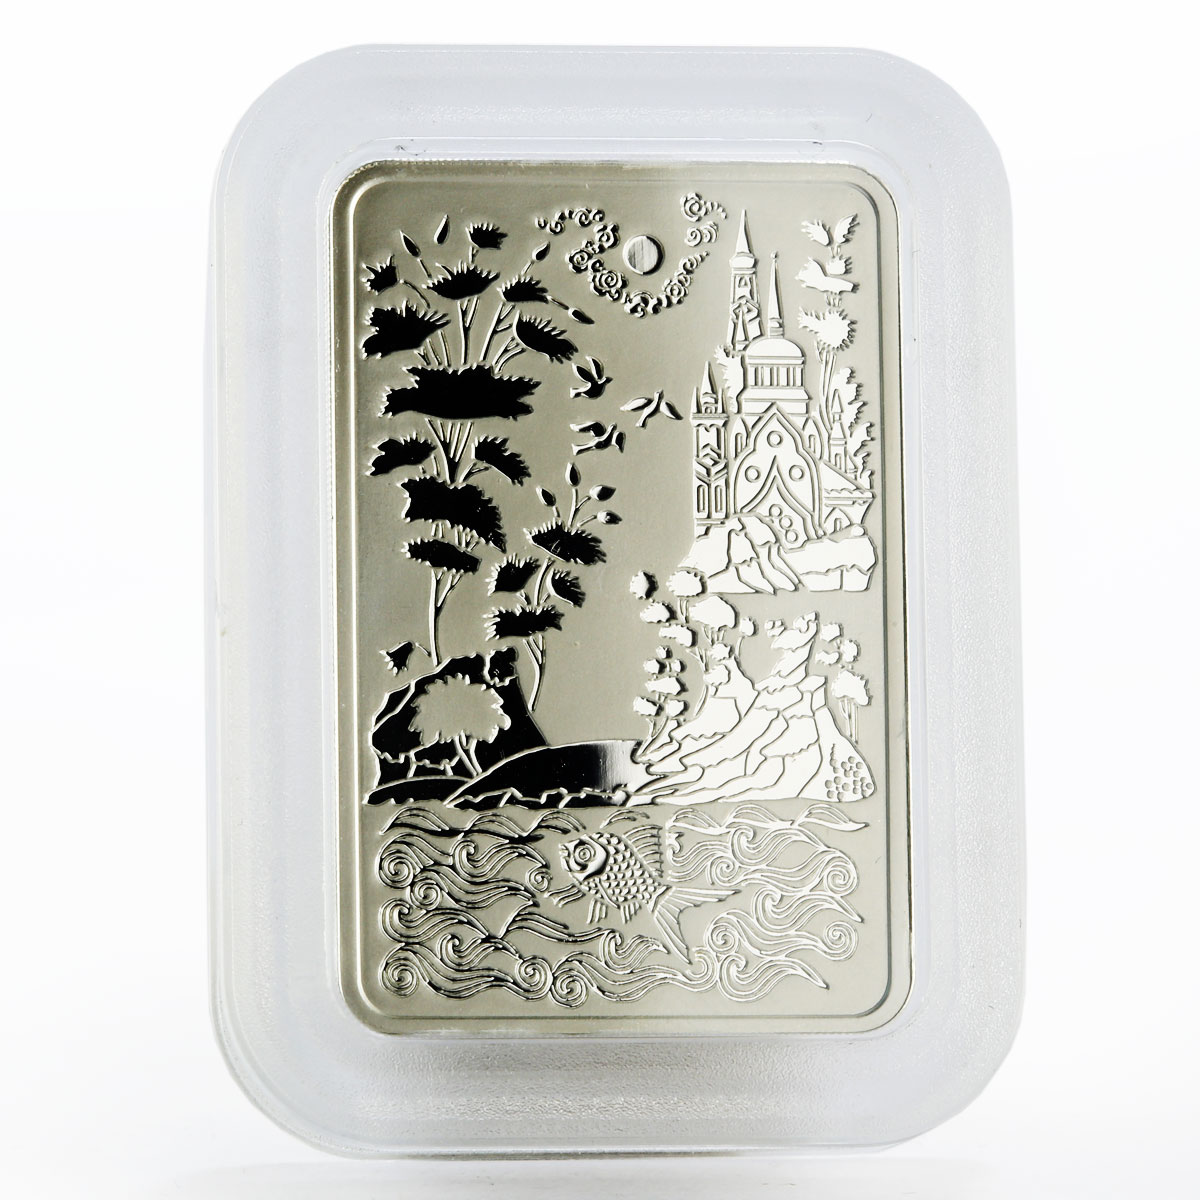 Tokelau 2 dollars Russian Folk Crafts series Palekh Art silver coin 2014